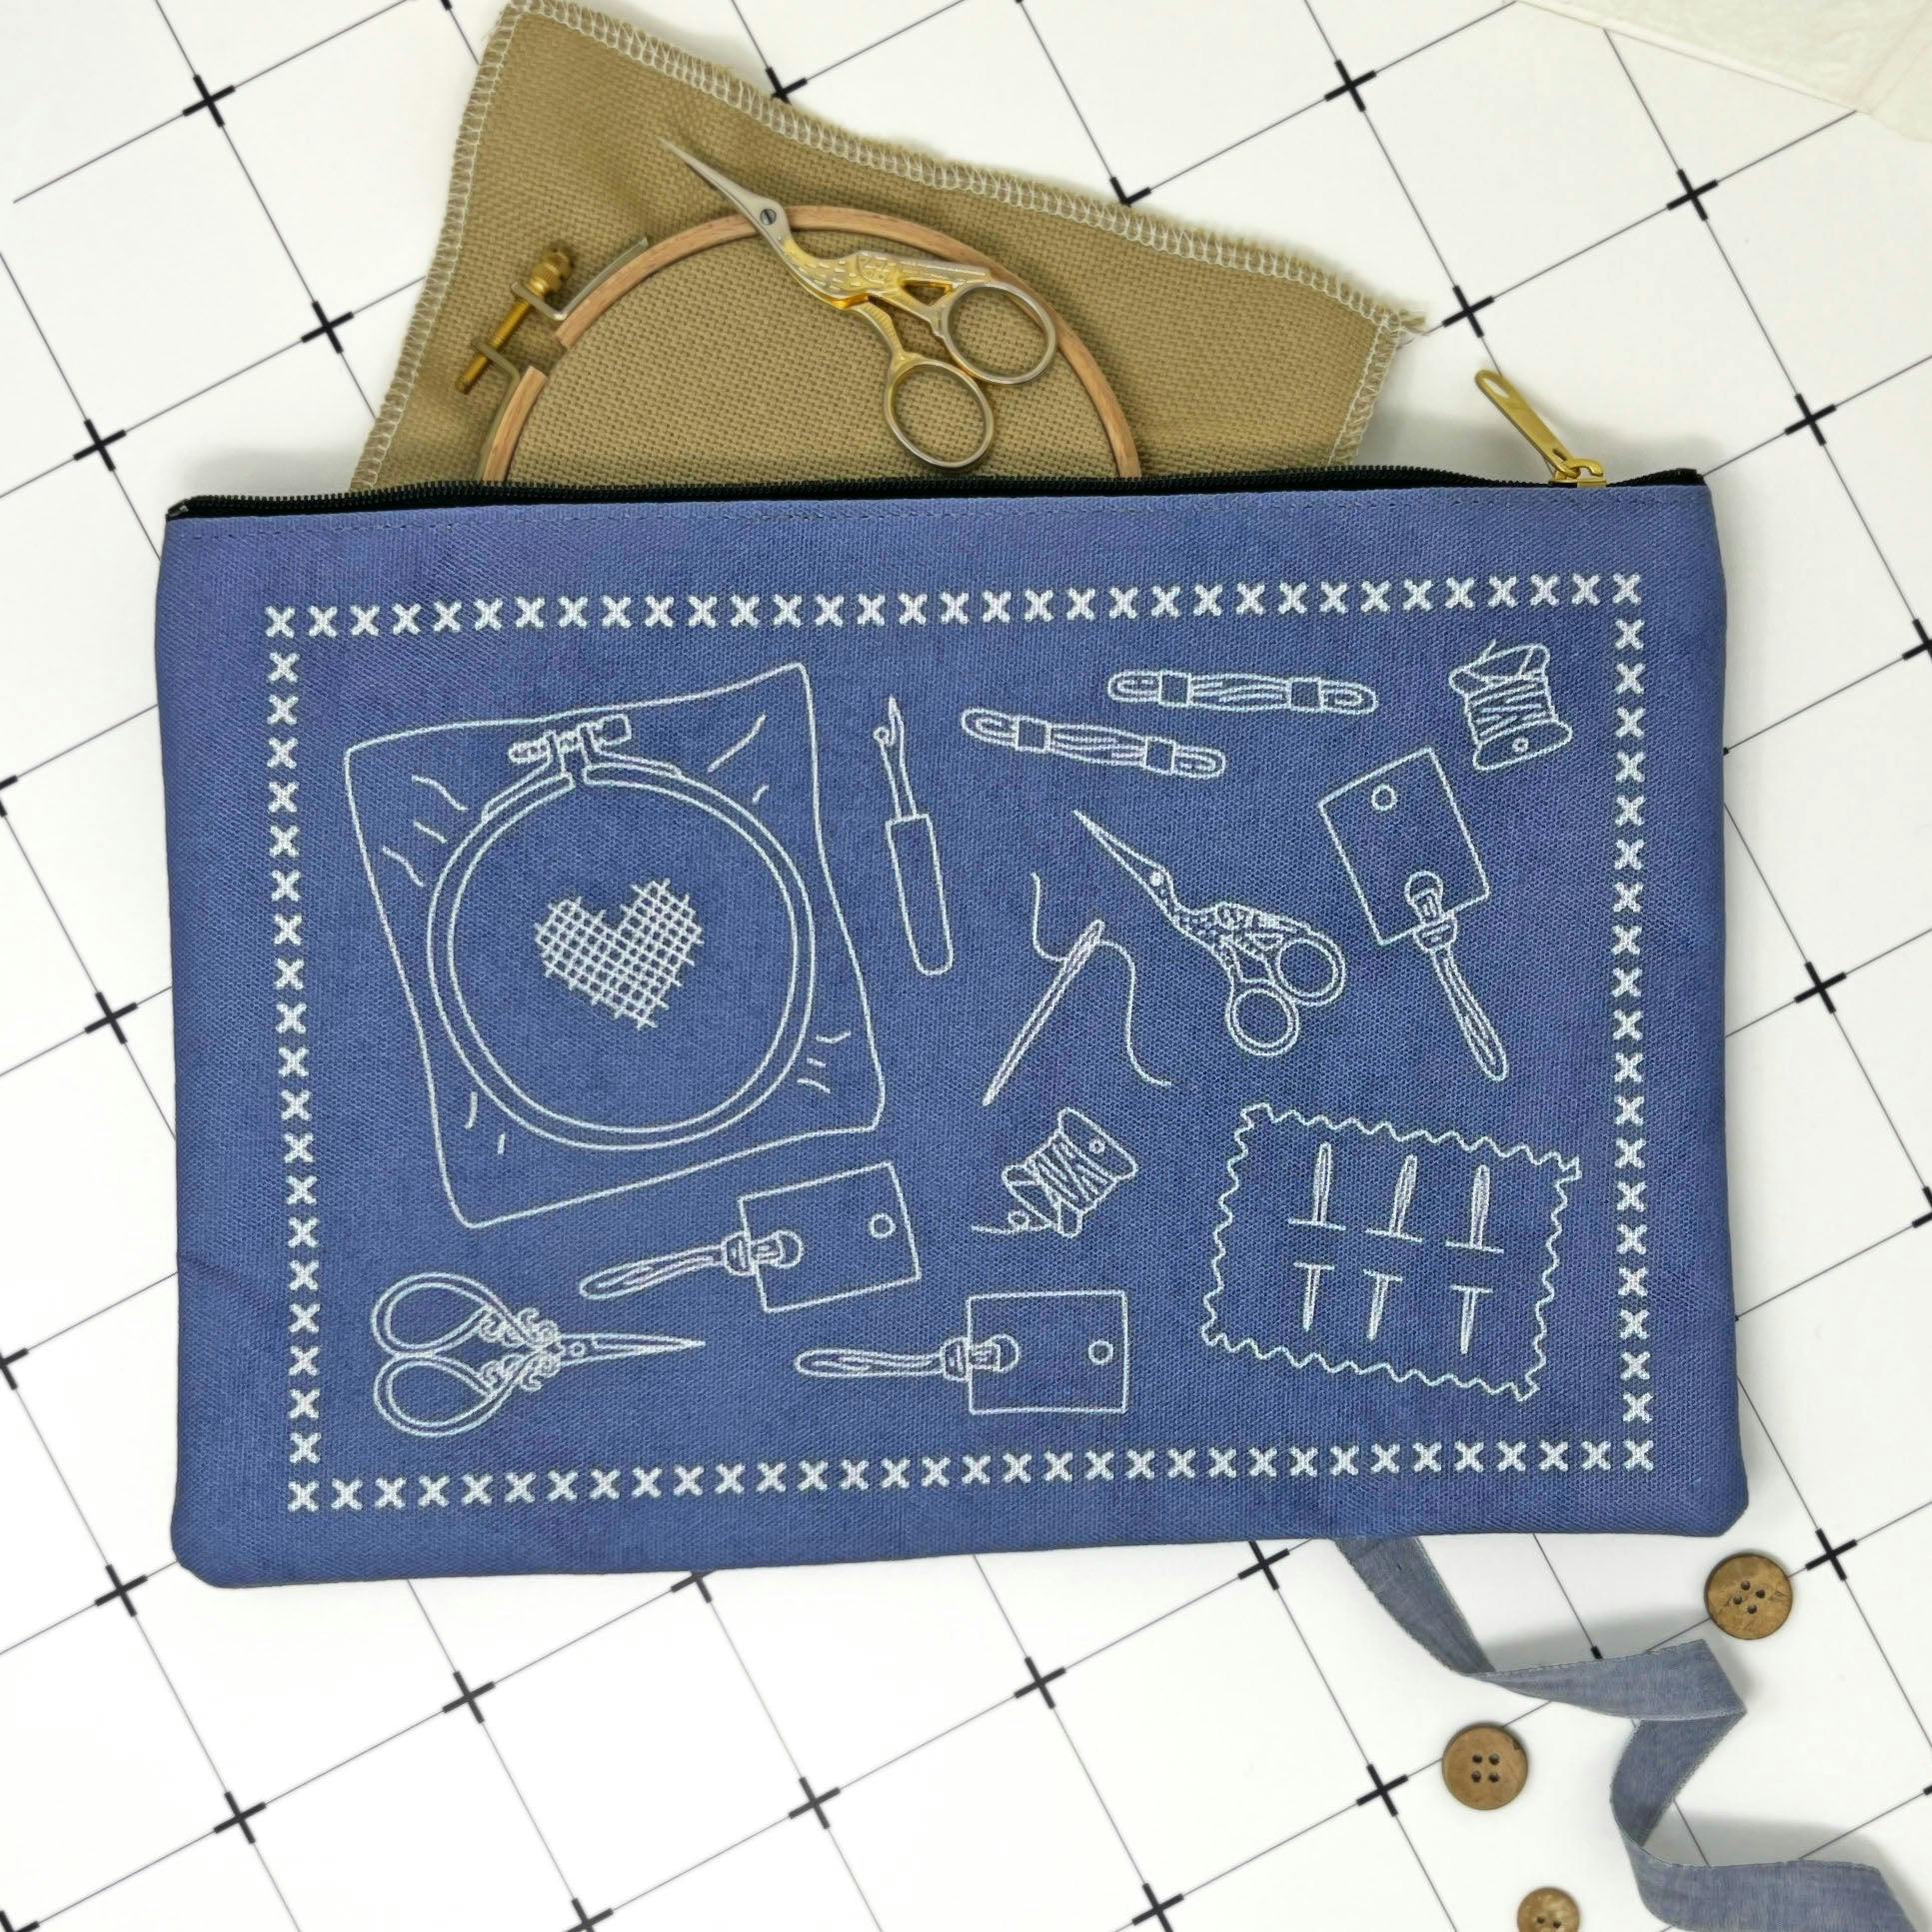 A Stitcher's Supplies Project Bag